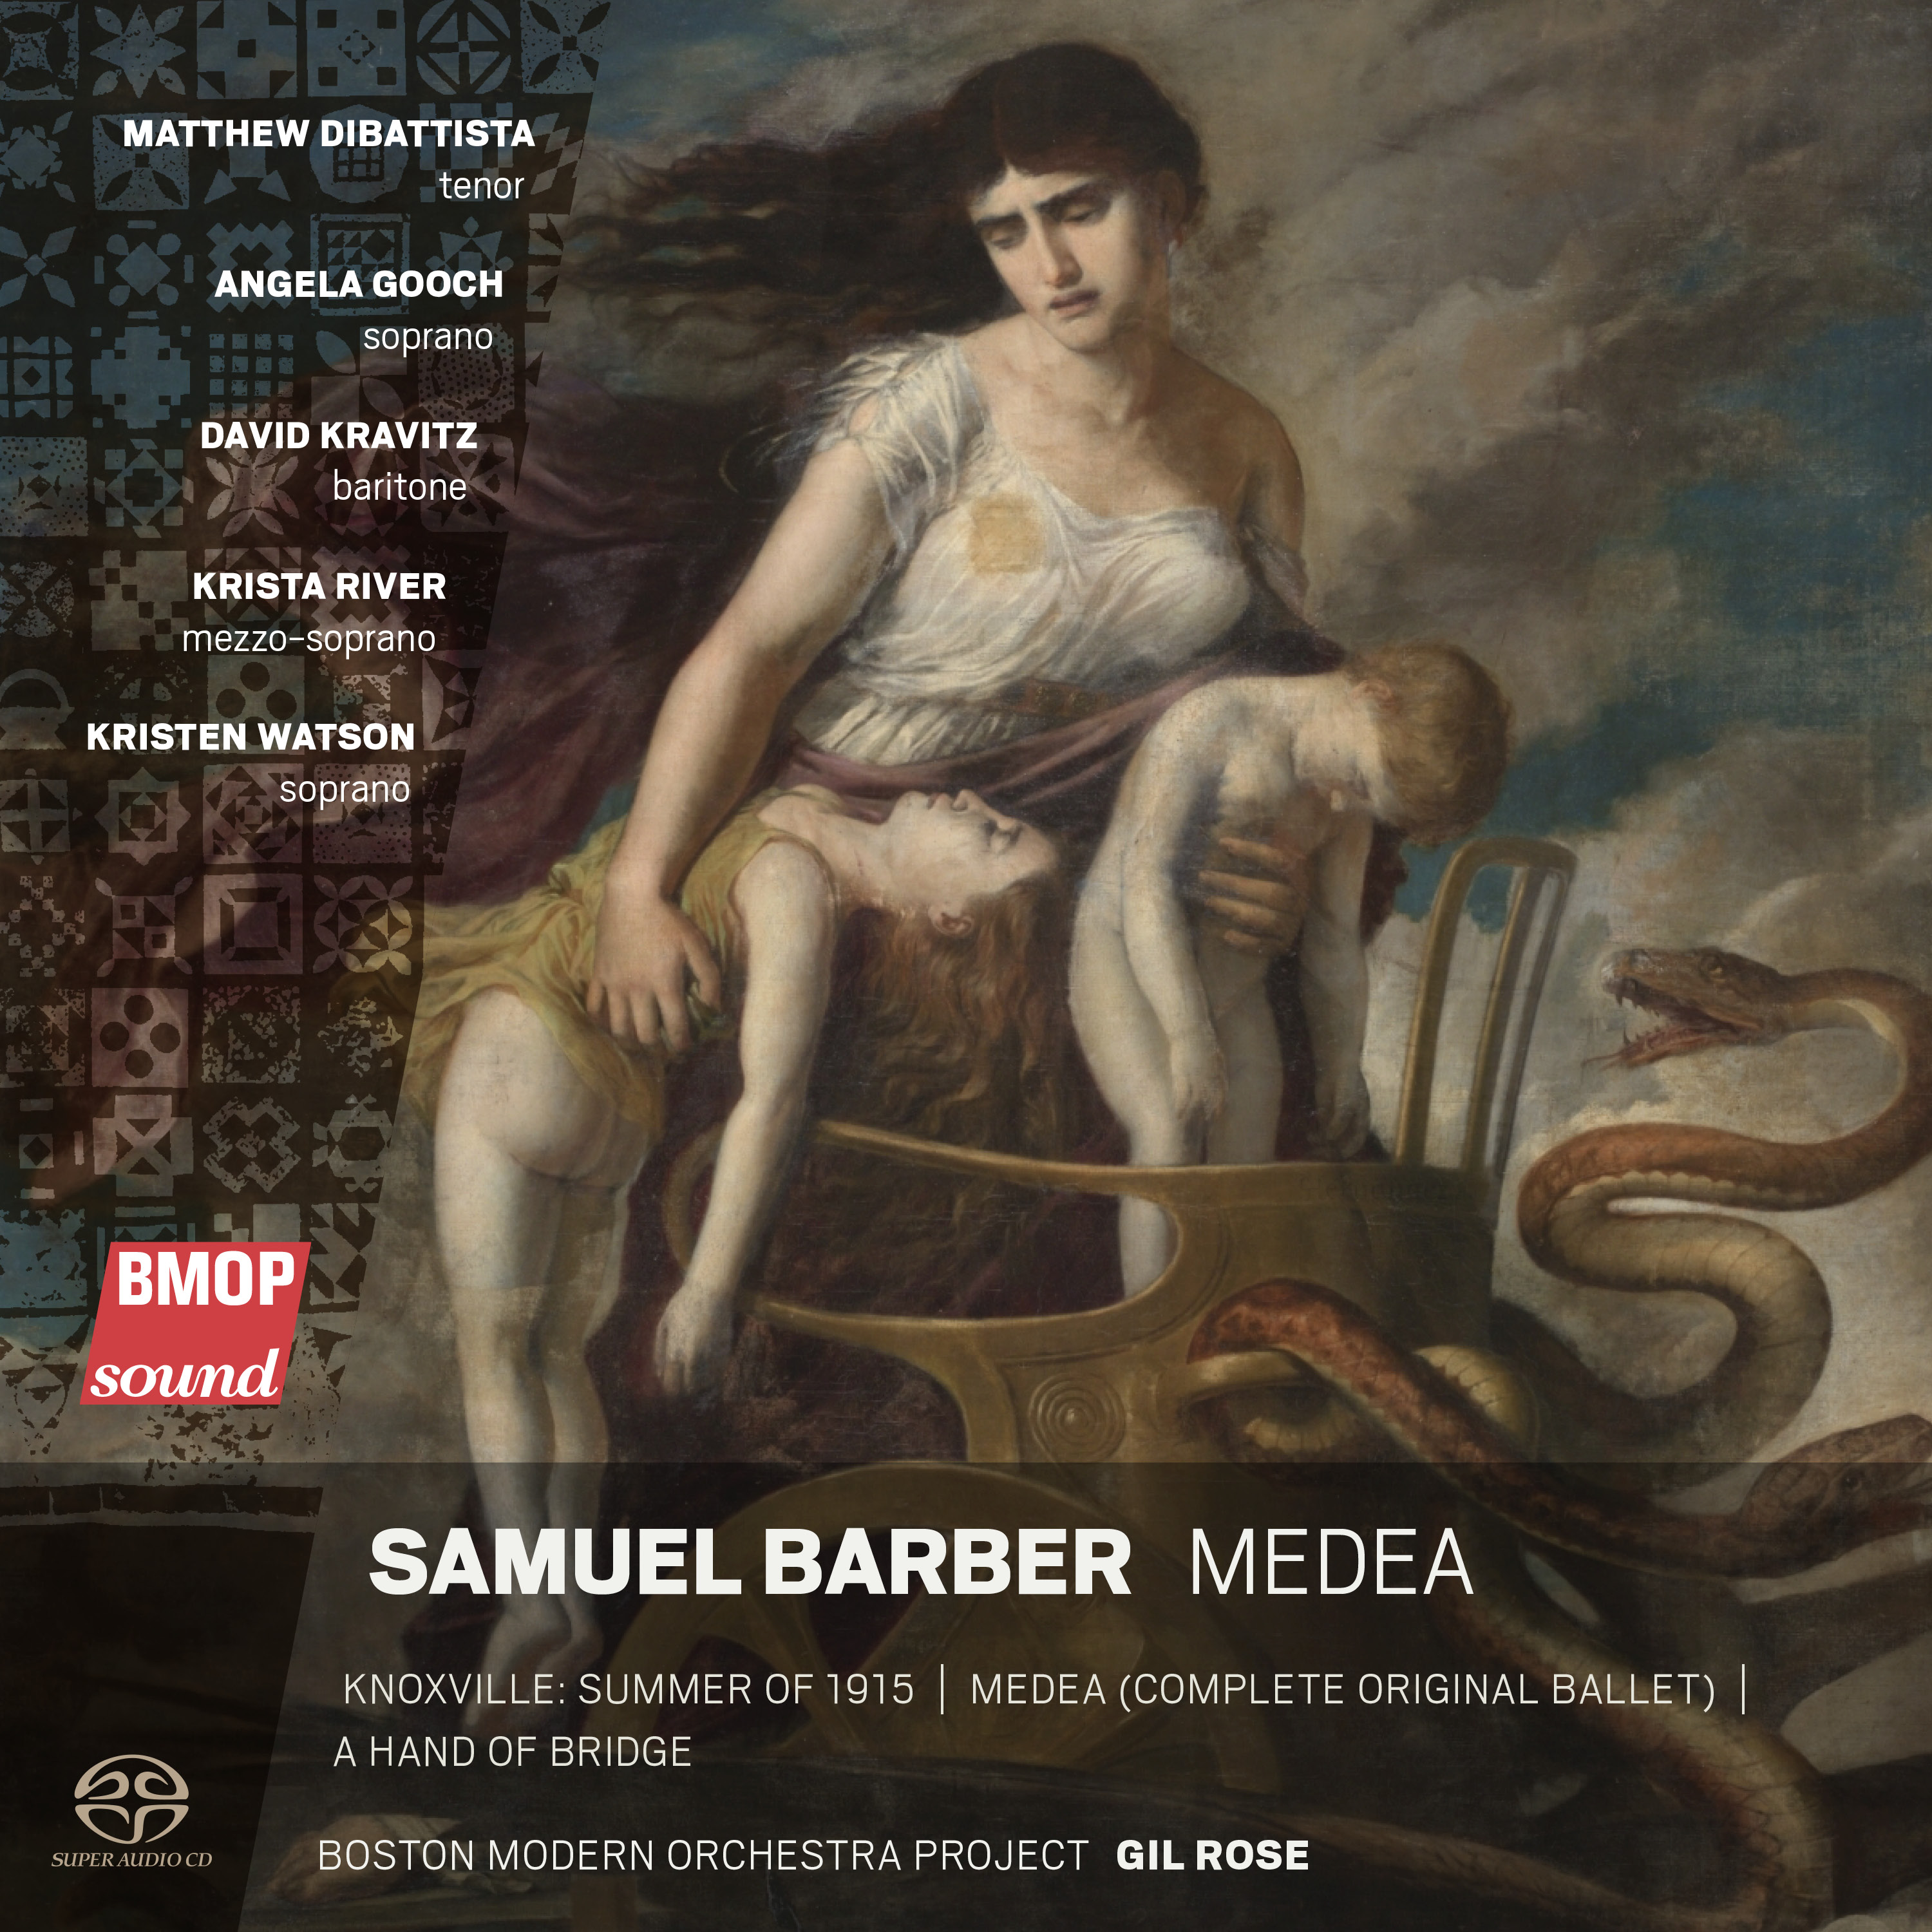 Art for Medea: IX. Allegro molto by Samuel Barber